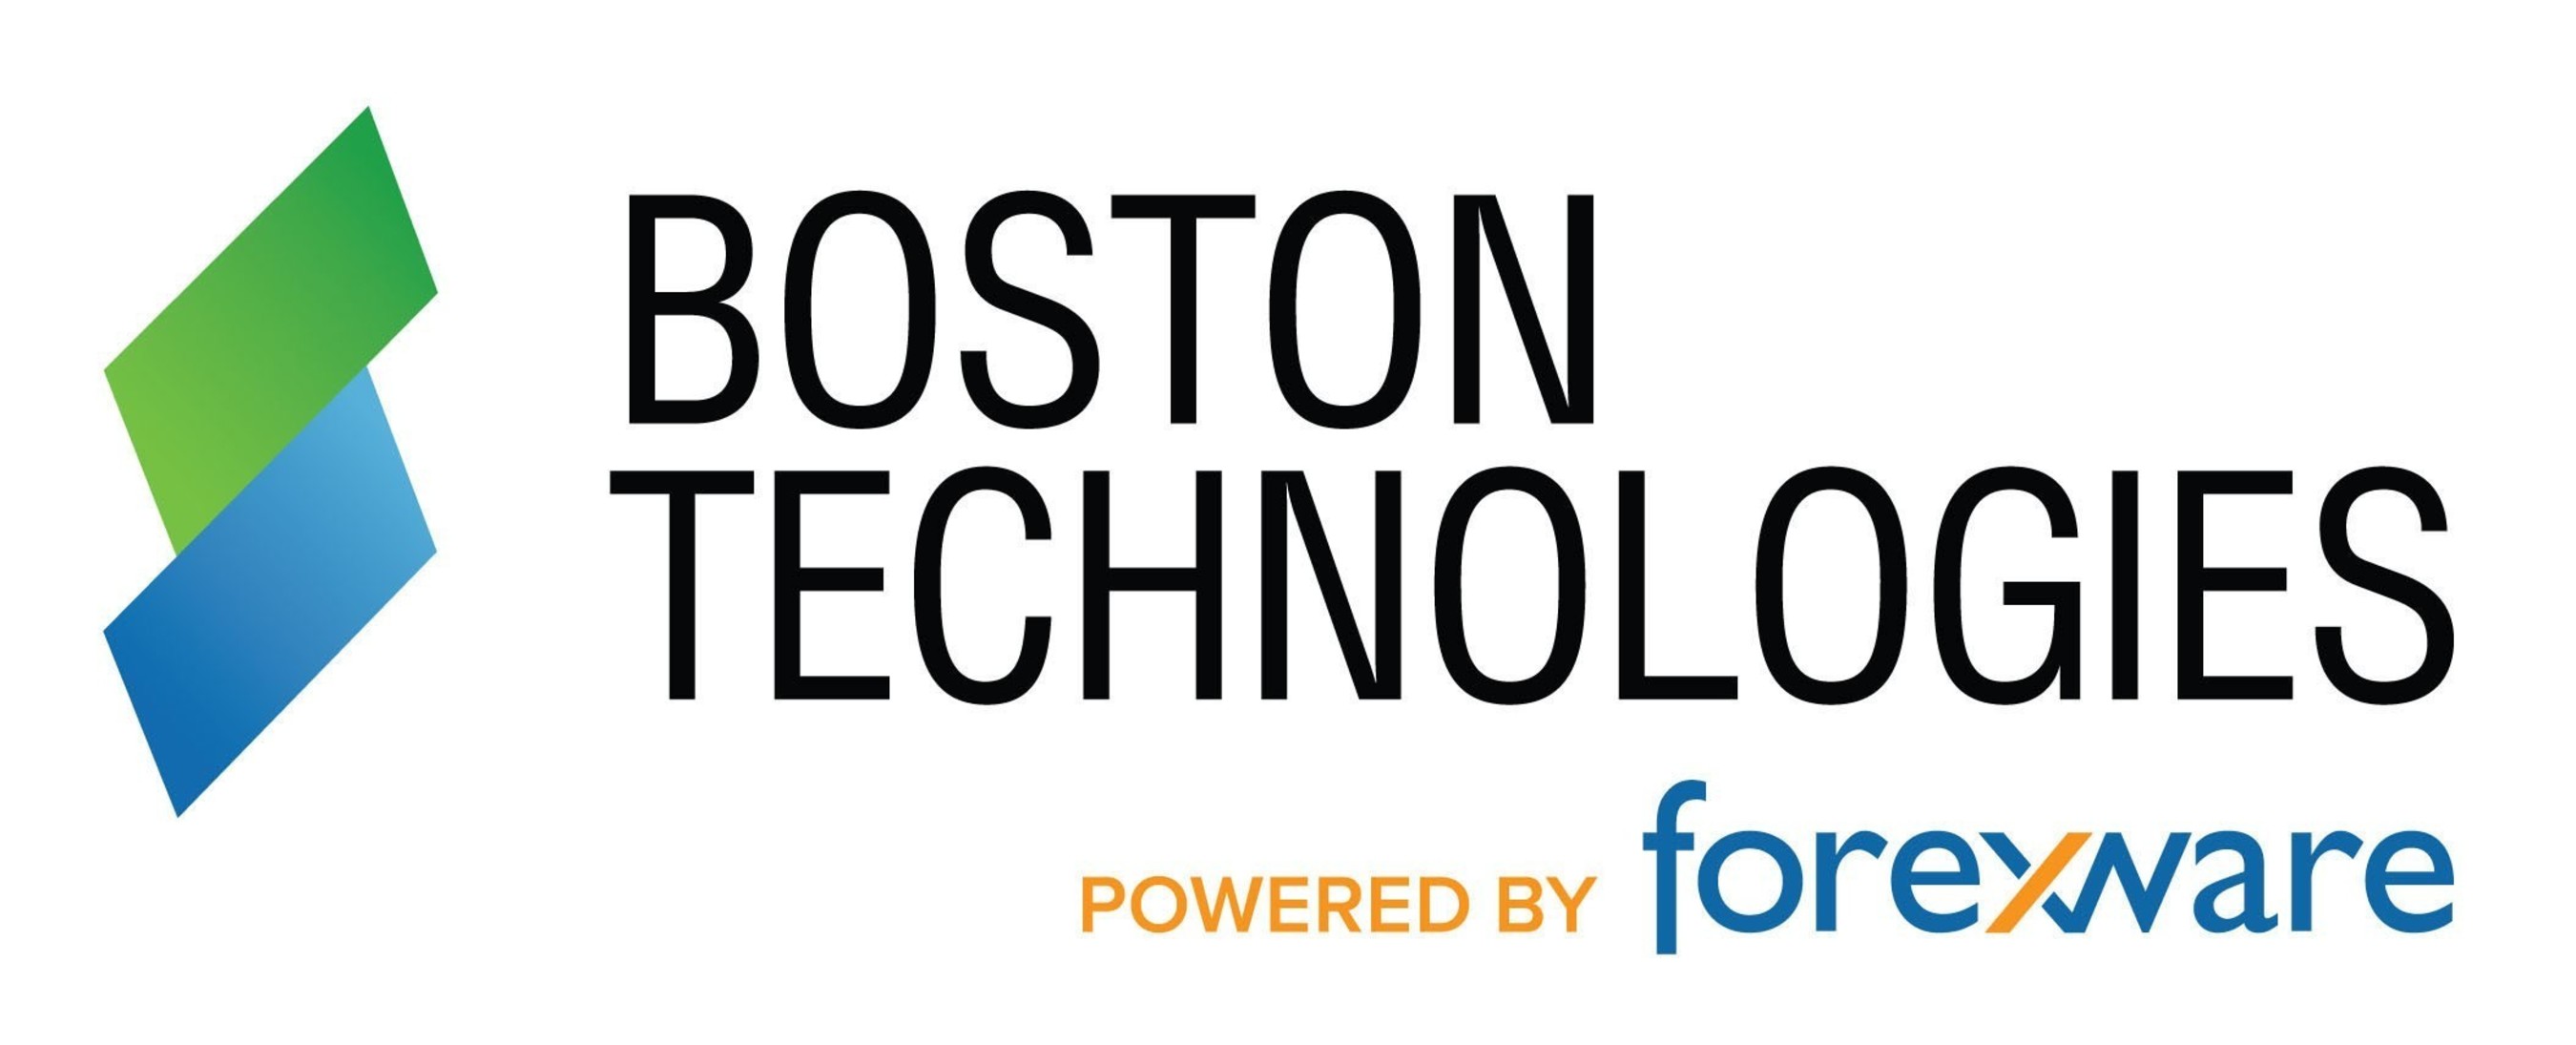 Boston Technologies Powered by Forexware logo.